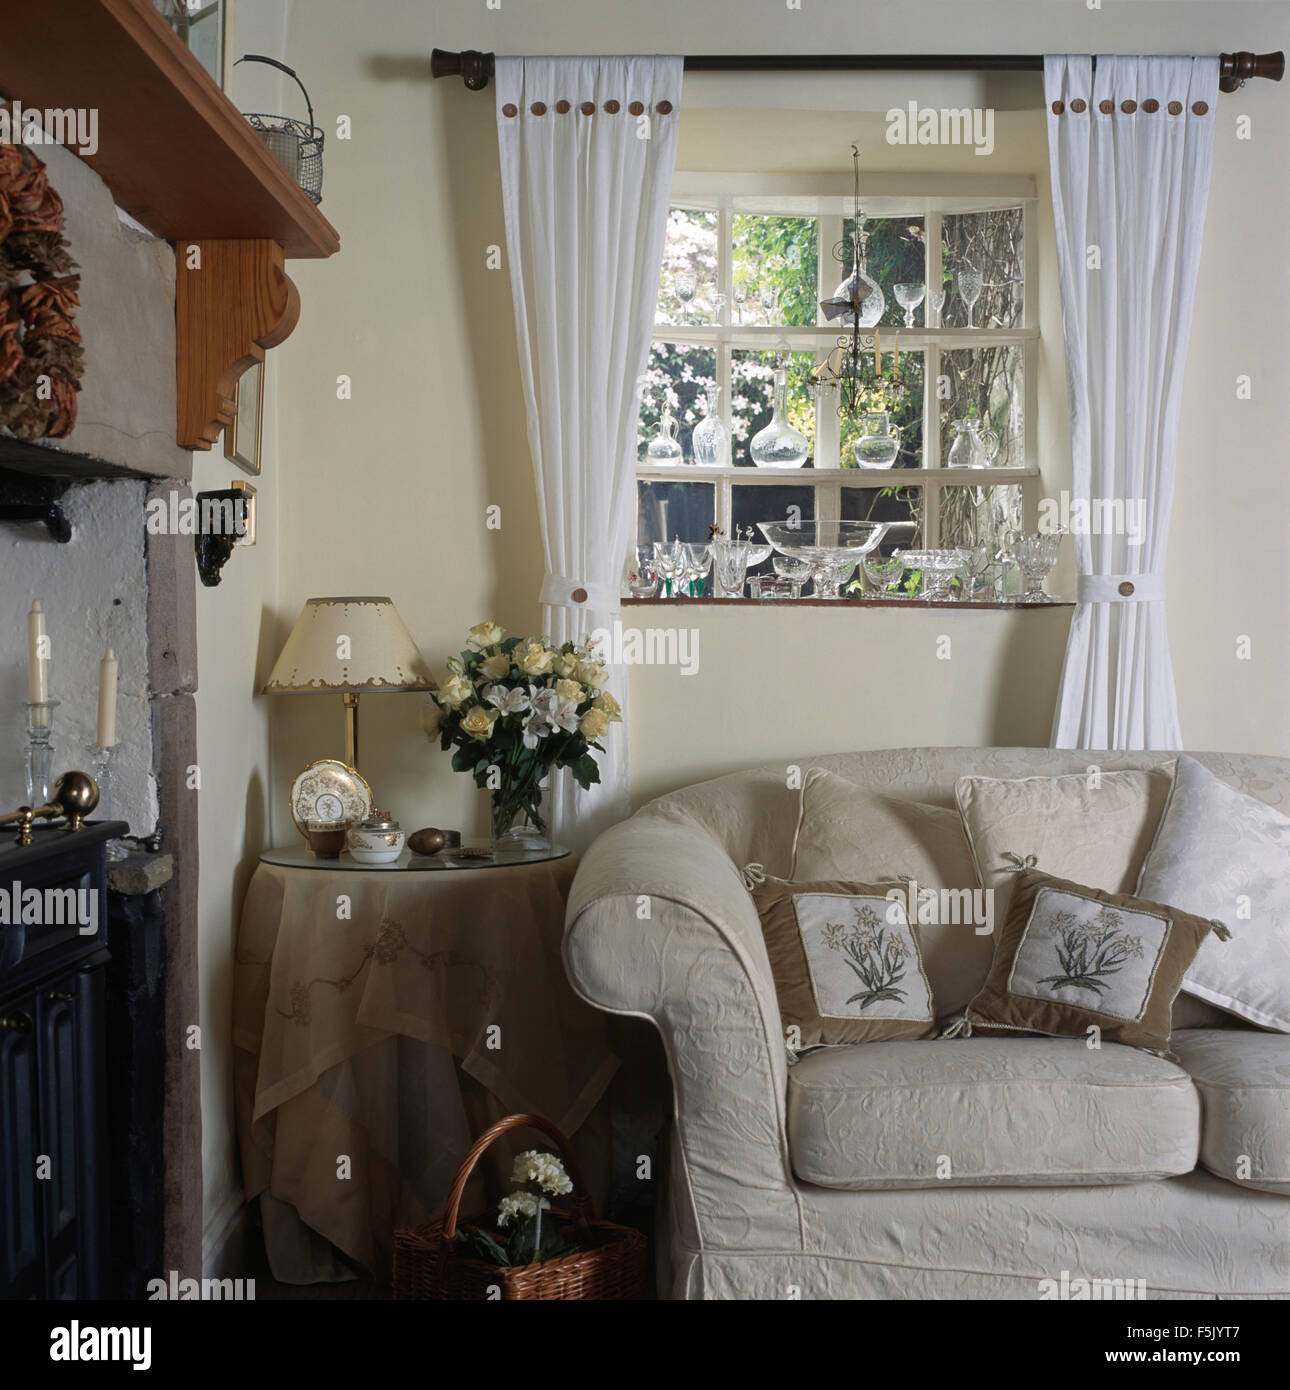 https://c8.alamy.com/compit/f5jyt7/tende-bianche-sulla-finestra-sopra-divano-bianco-in-novanta-cottage-salotto-f5jyt7.jpg